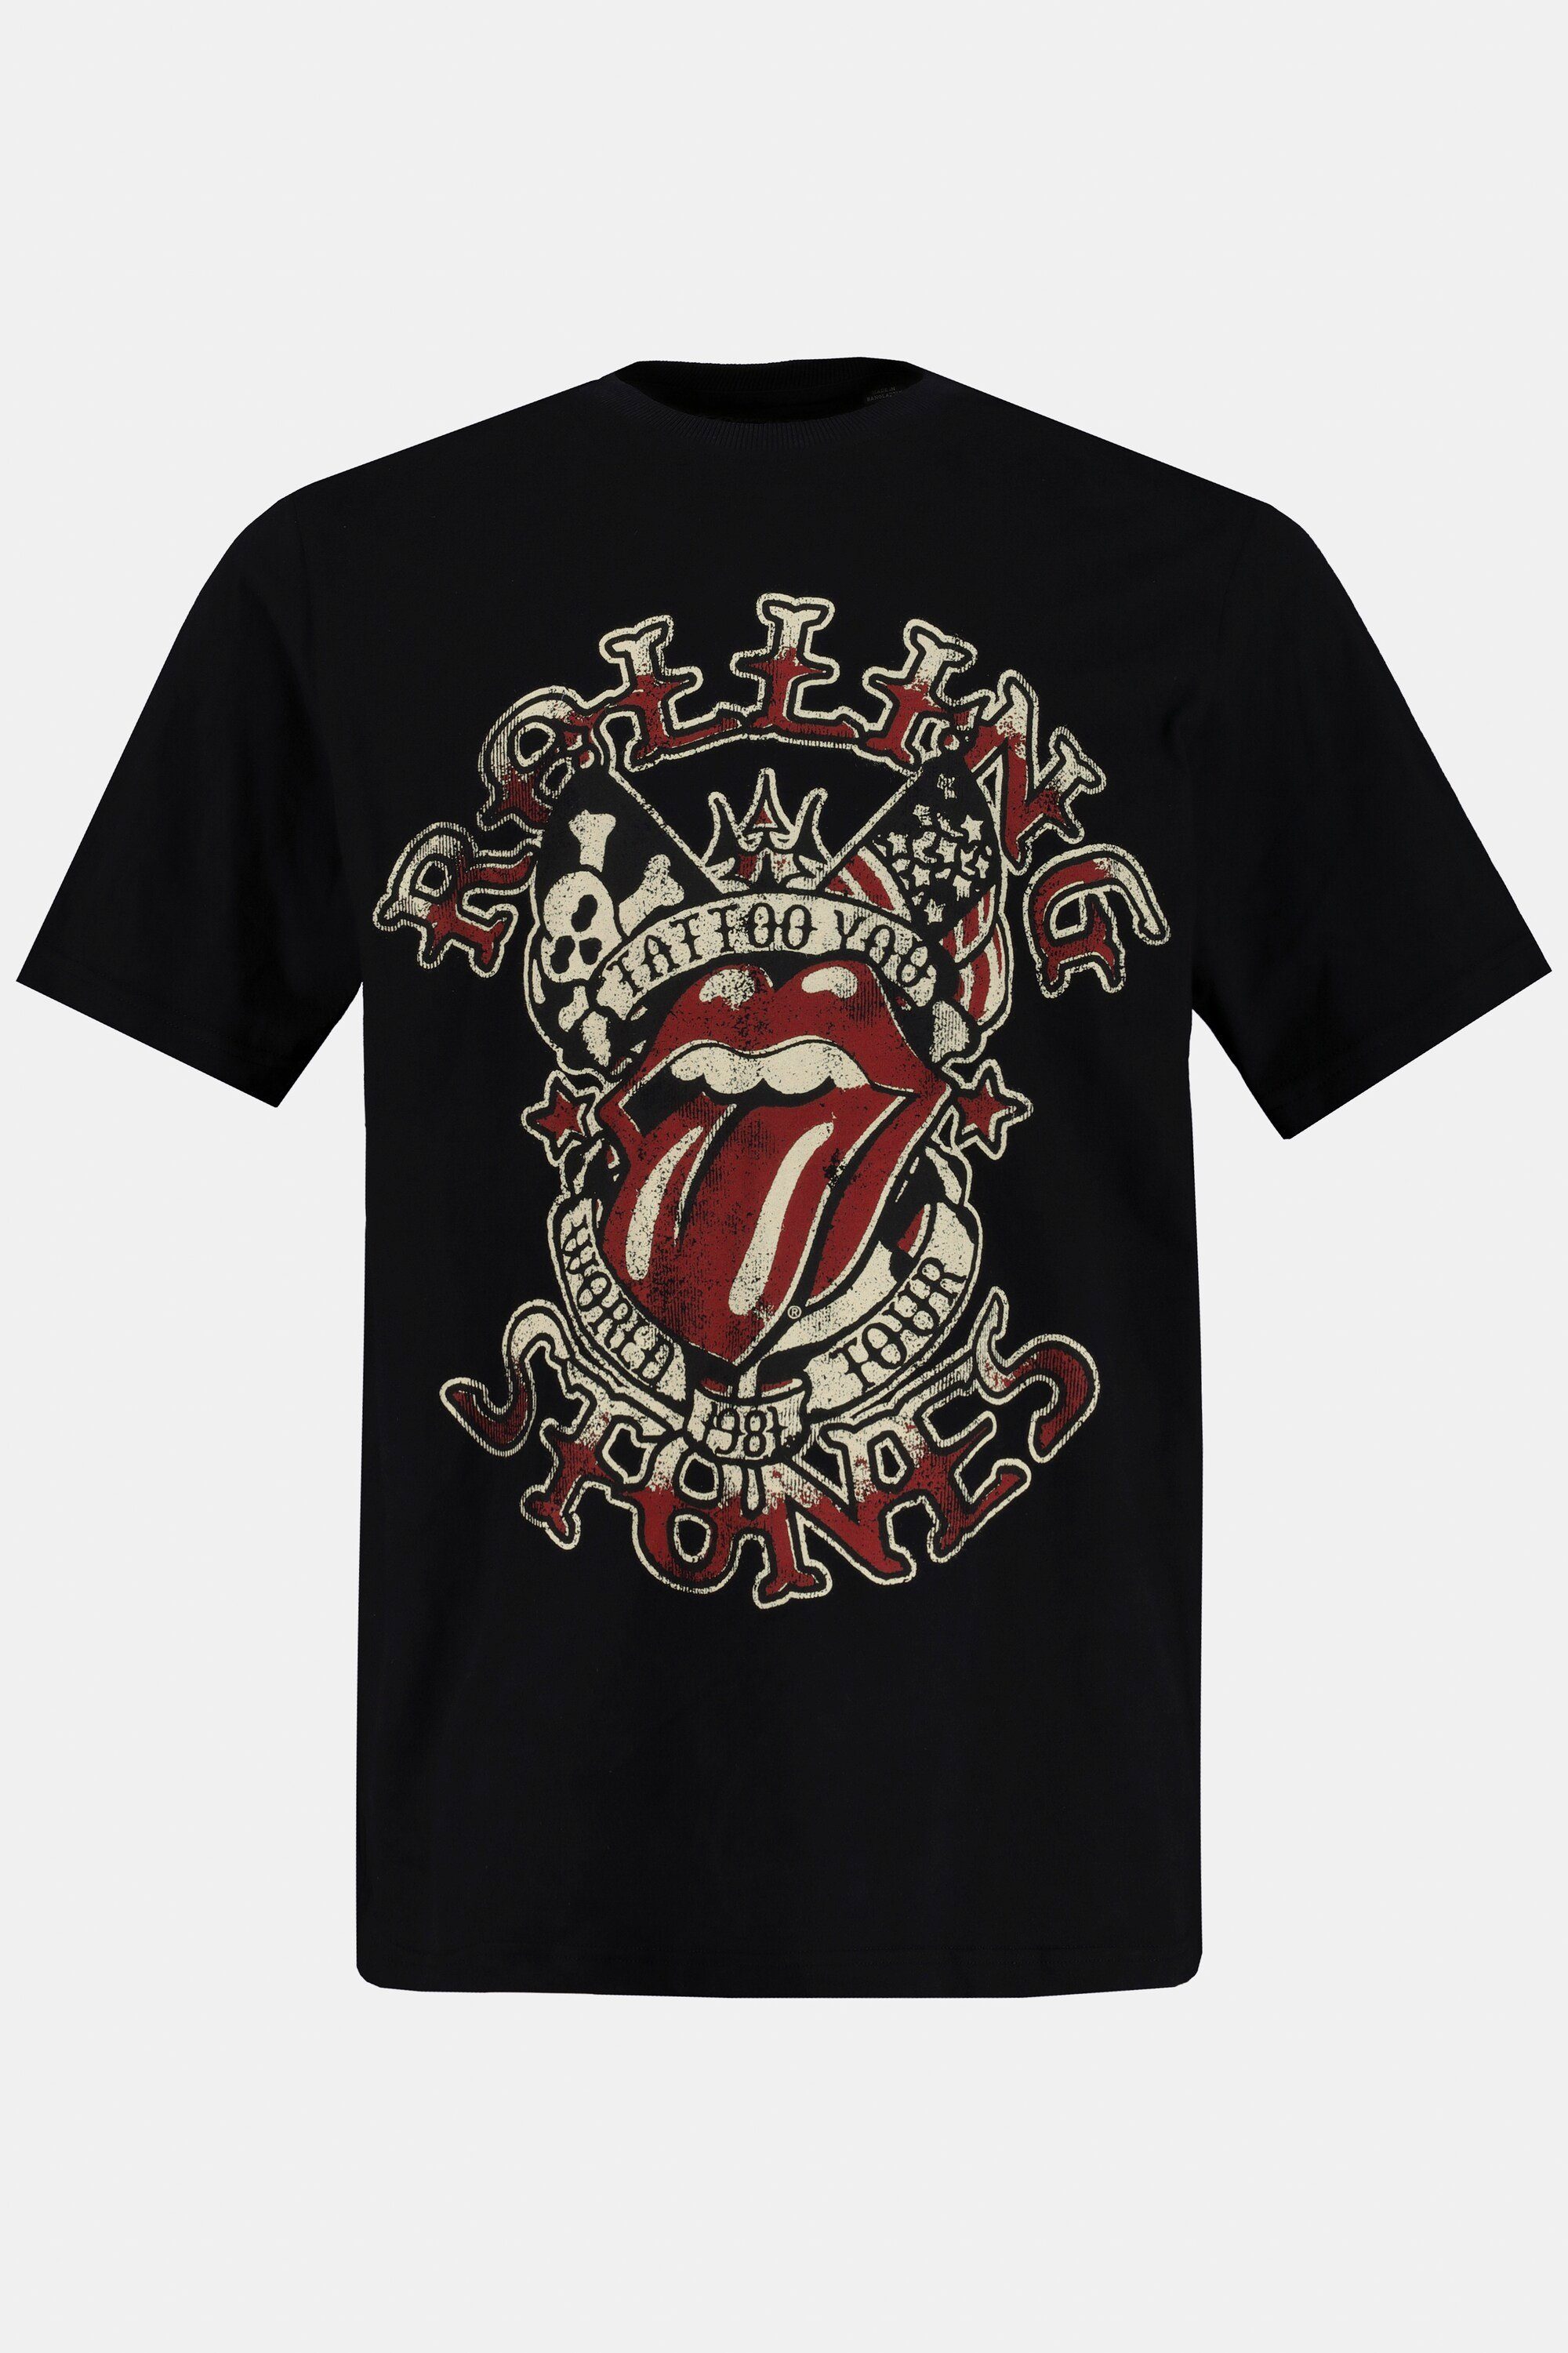 Bandshirt T-Shirt JP1880 Stones Rolling Halbarm T-Shirt